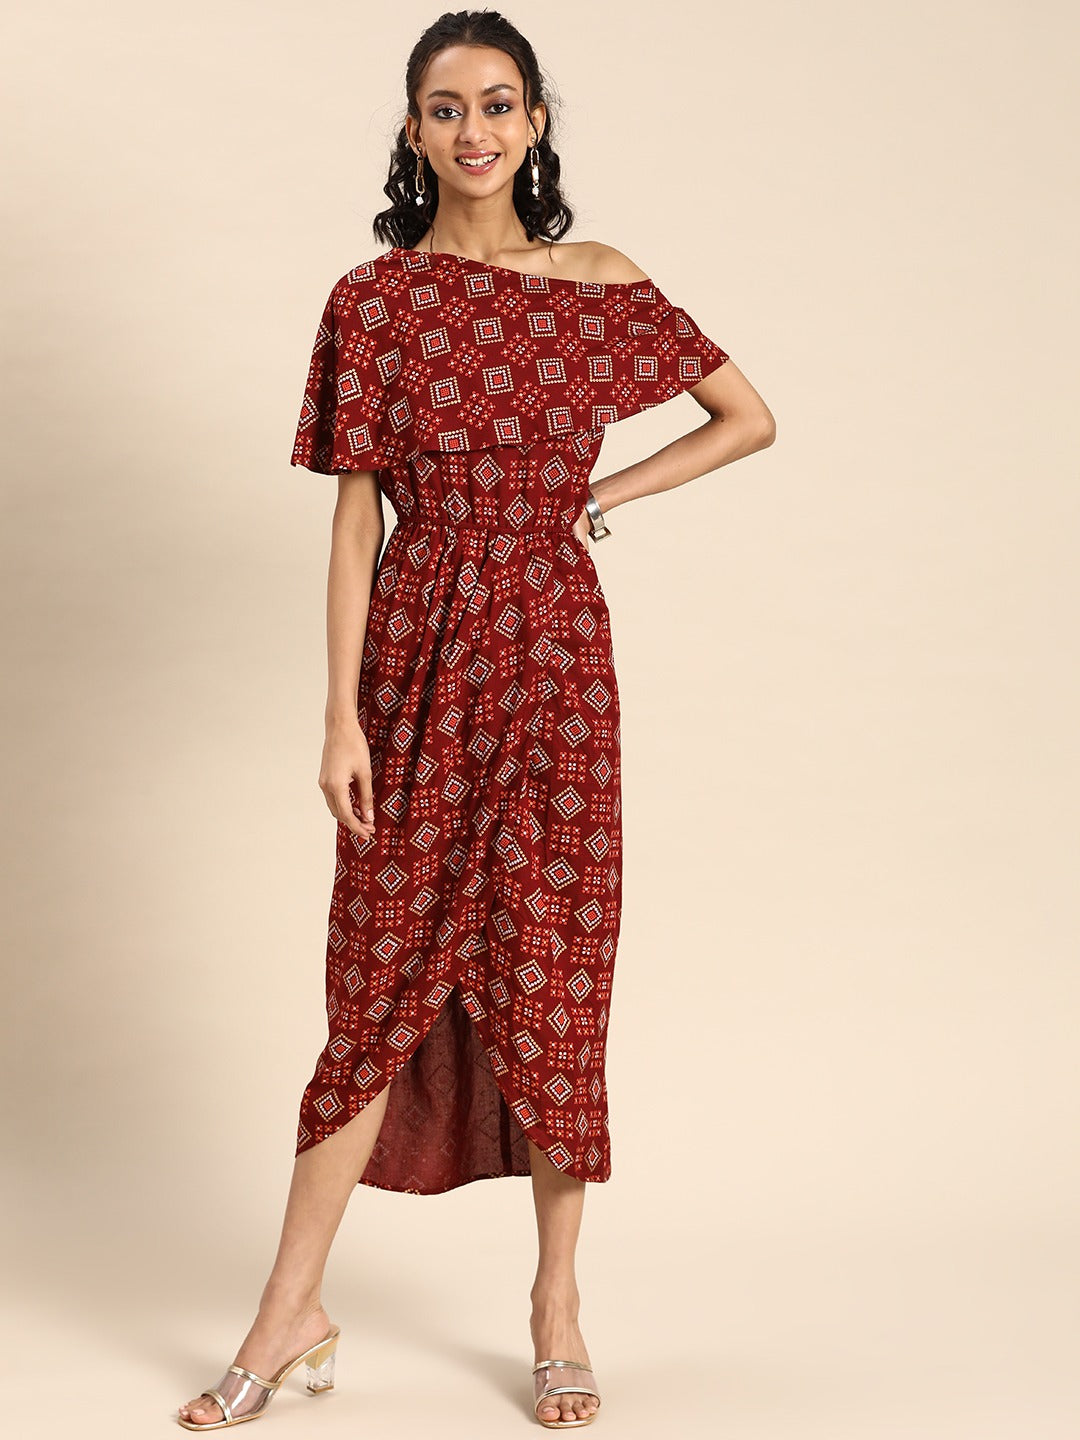 Cold shoulder Asymmetric overlap Dress in Maroon Print